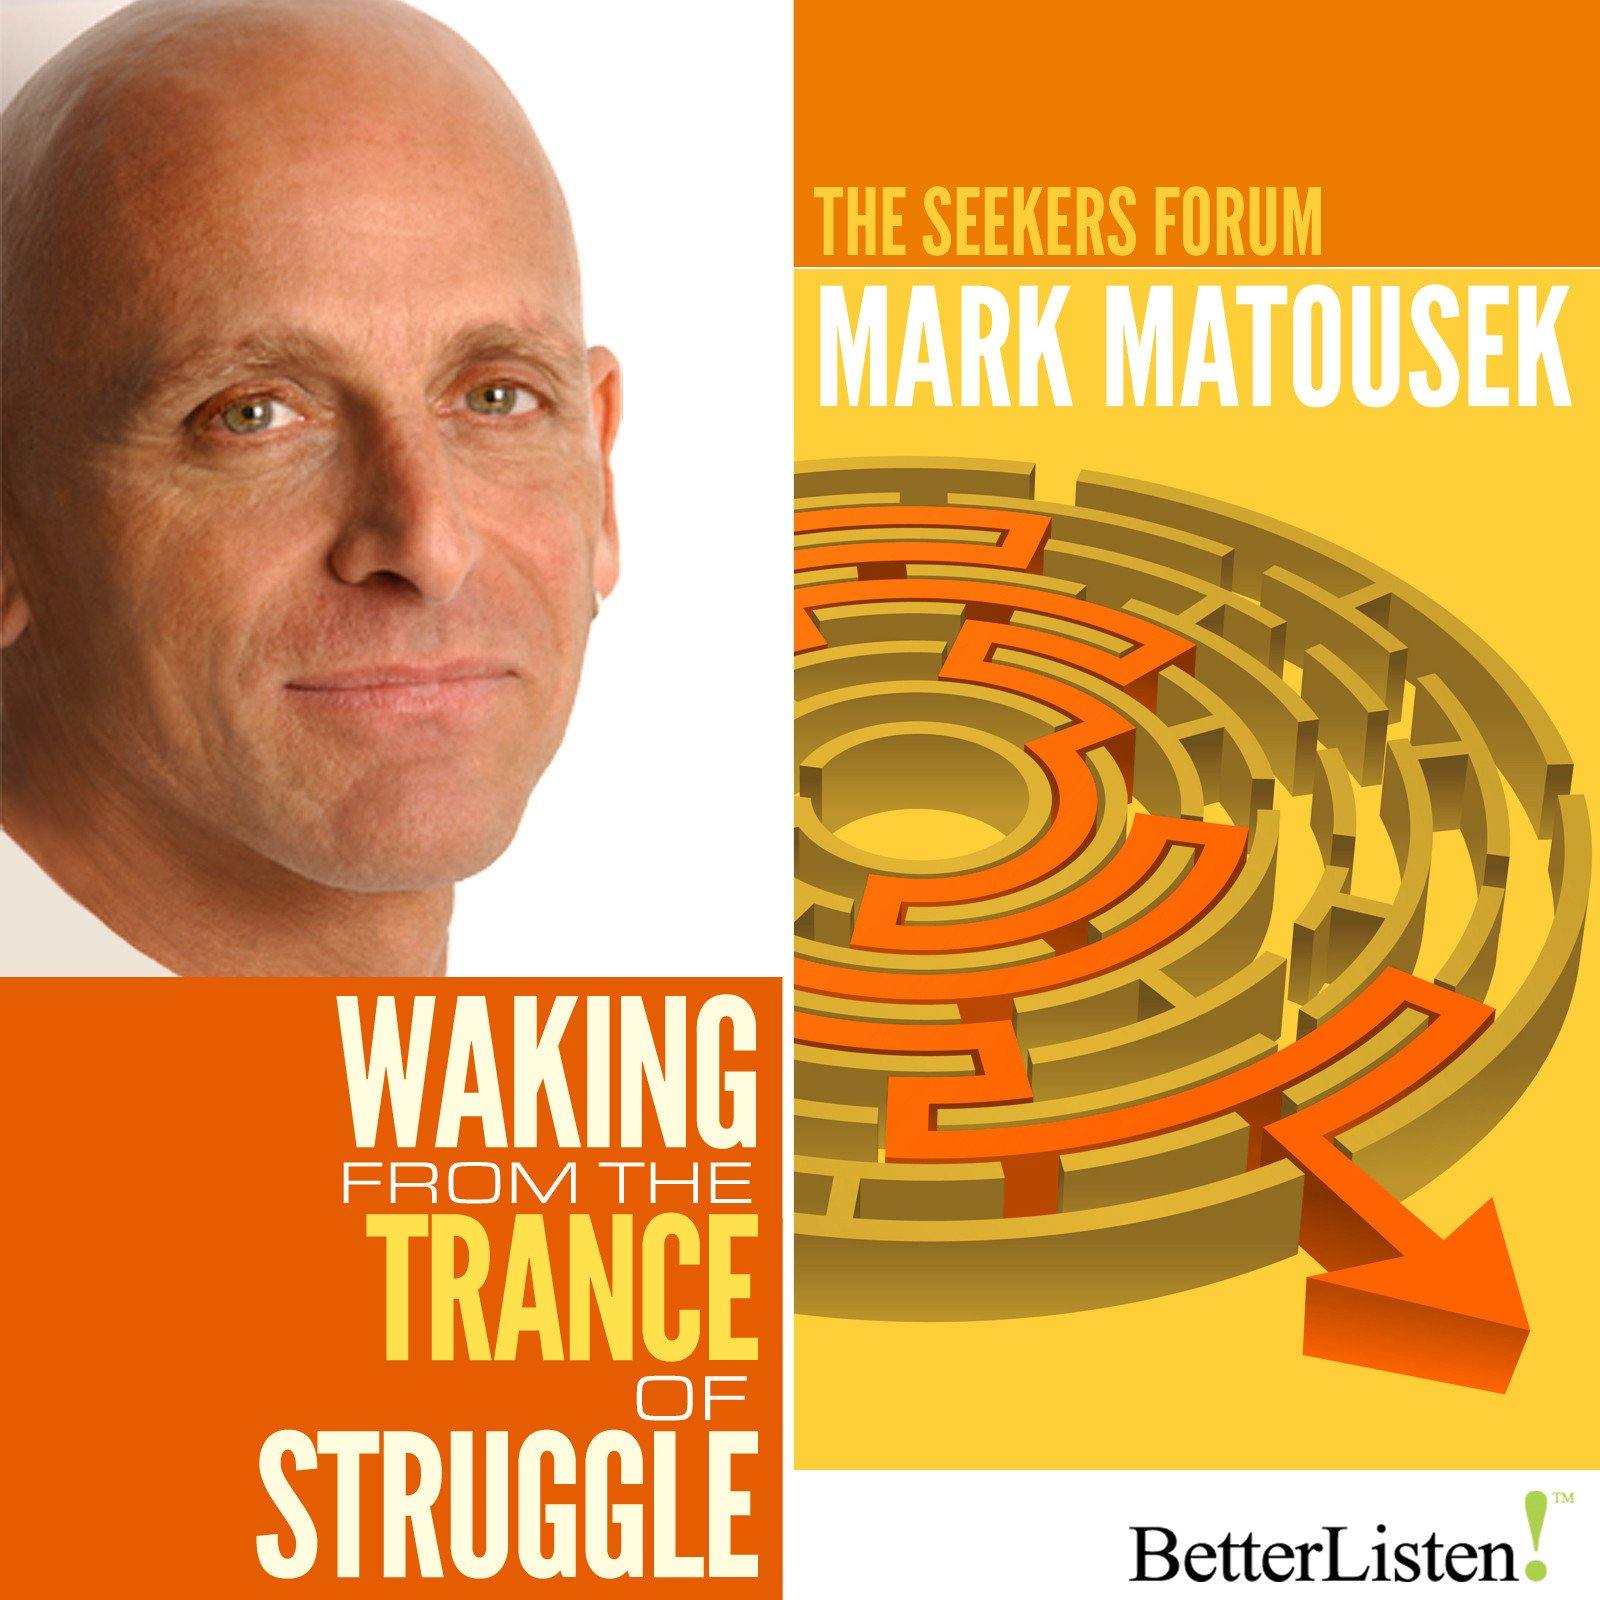 Waking from the Trance of Struggle with Mark Matousek Audio Program BetterListen! - BetterListen!